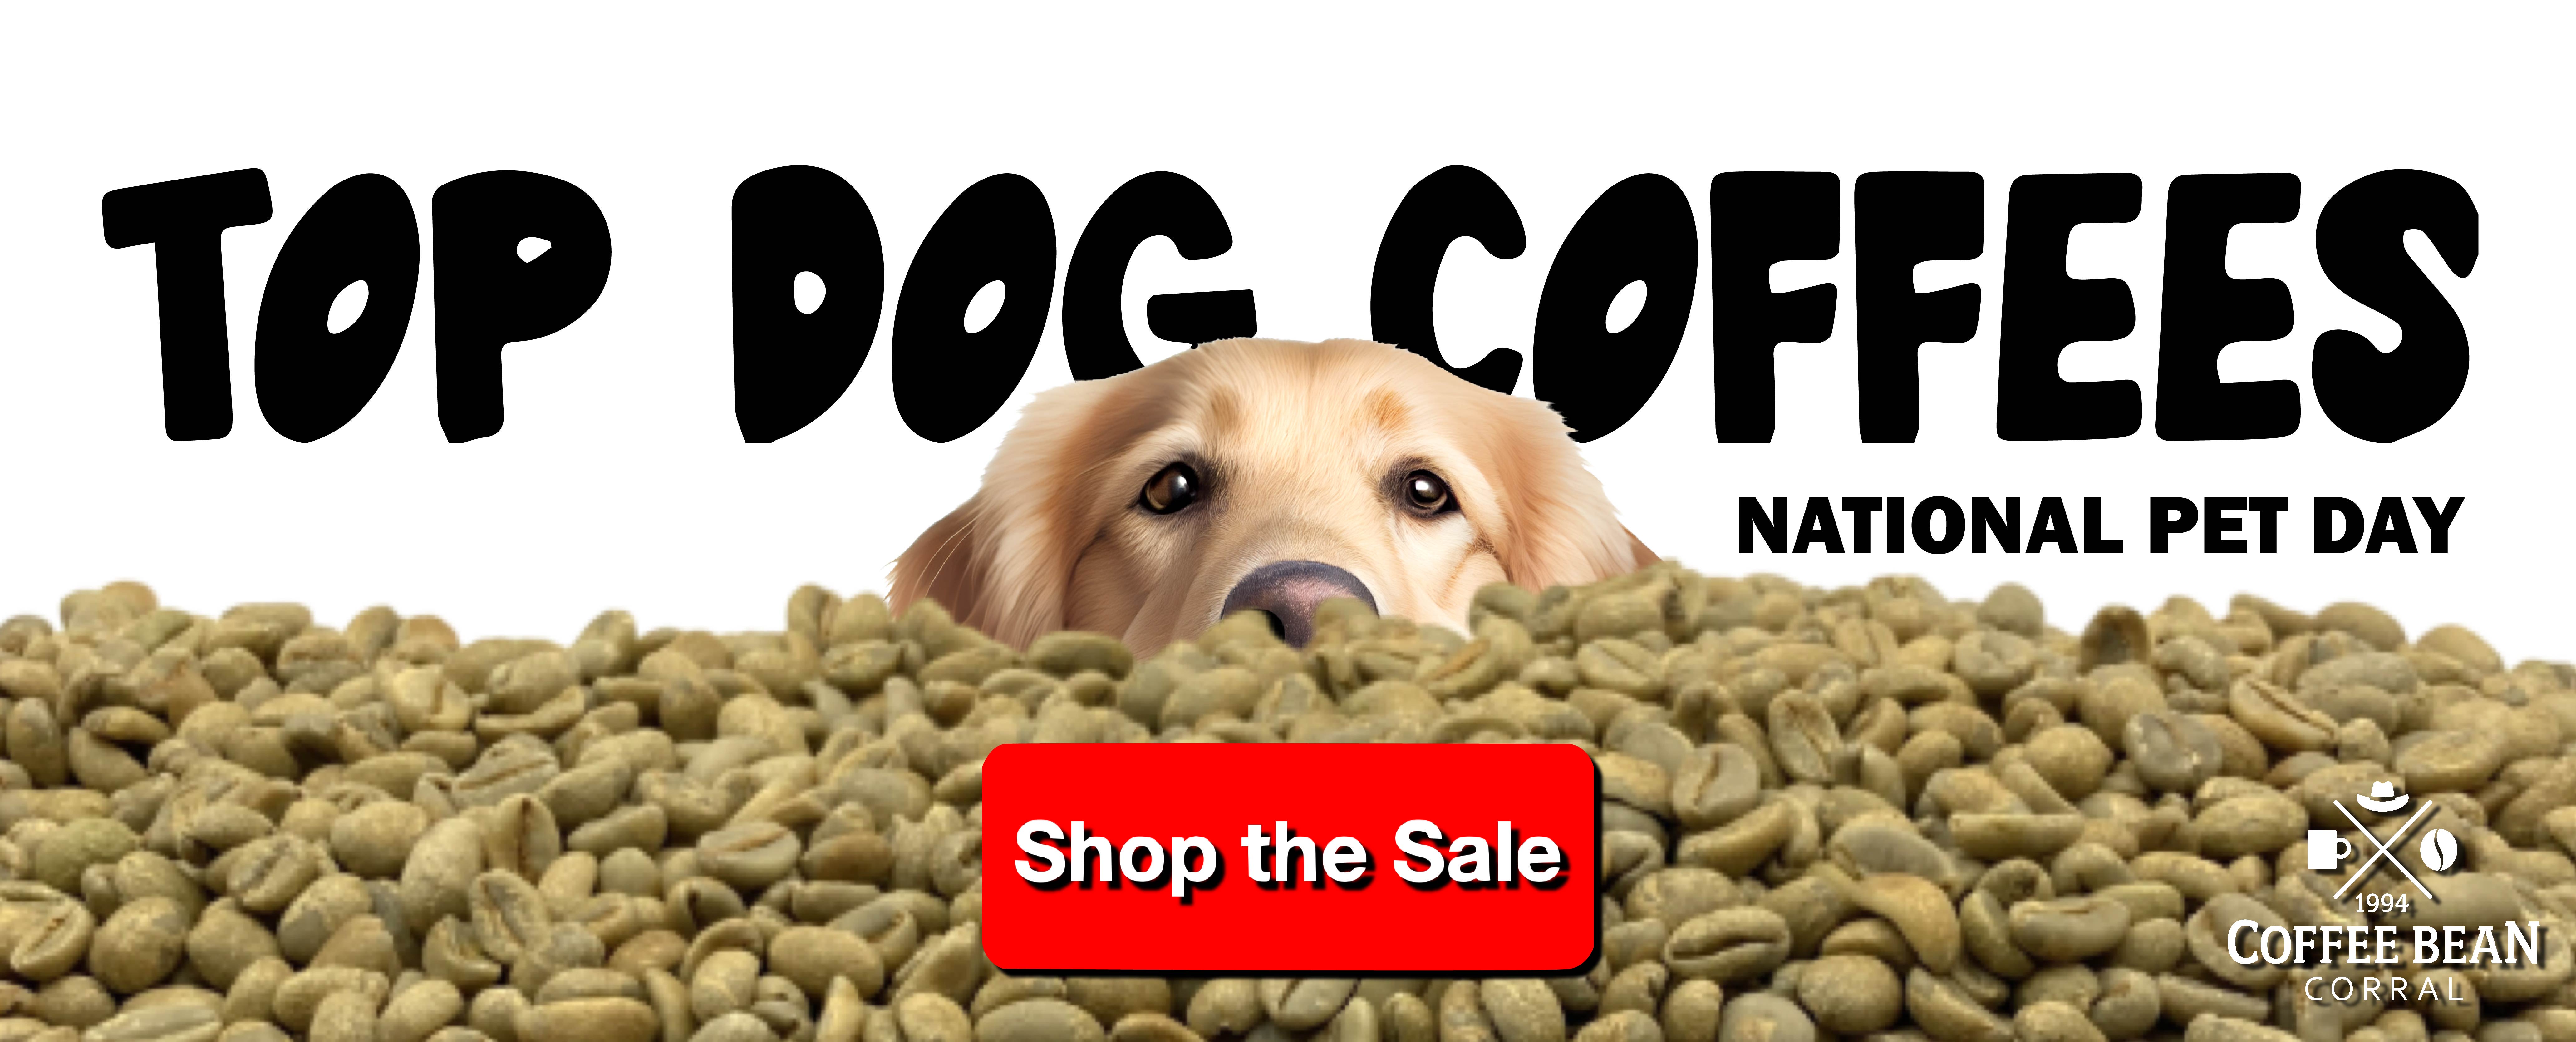 Top Dog Coffees